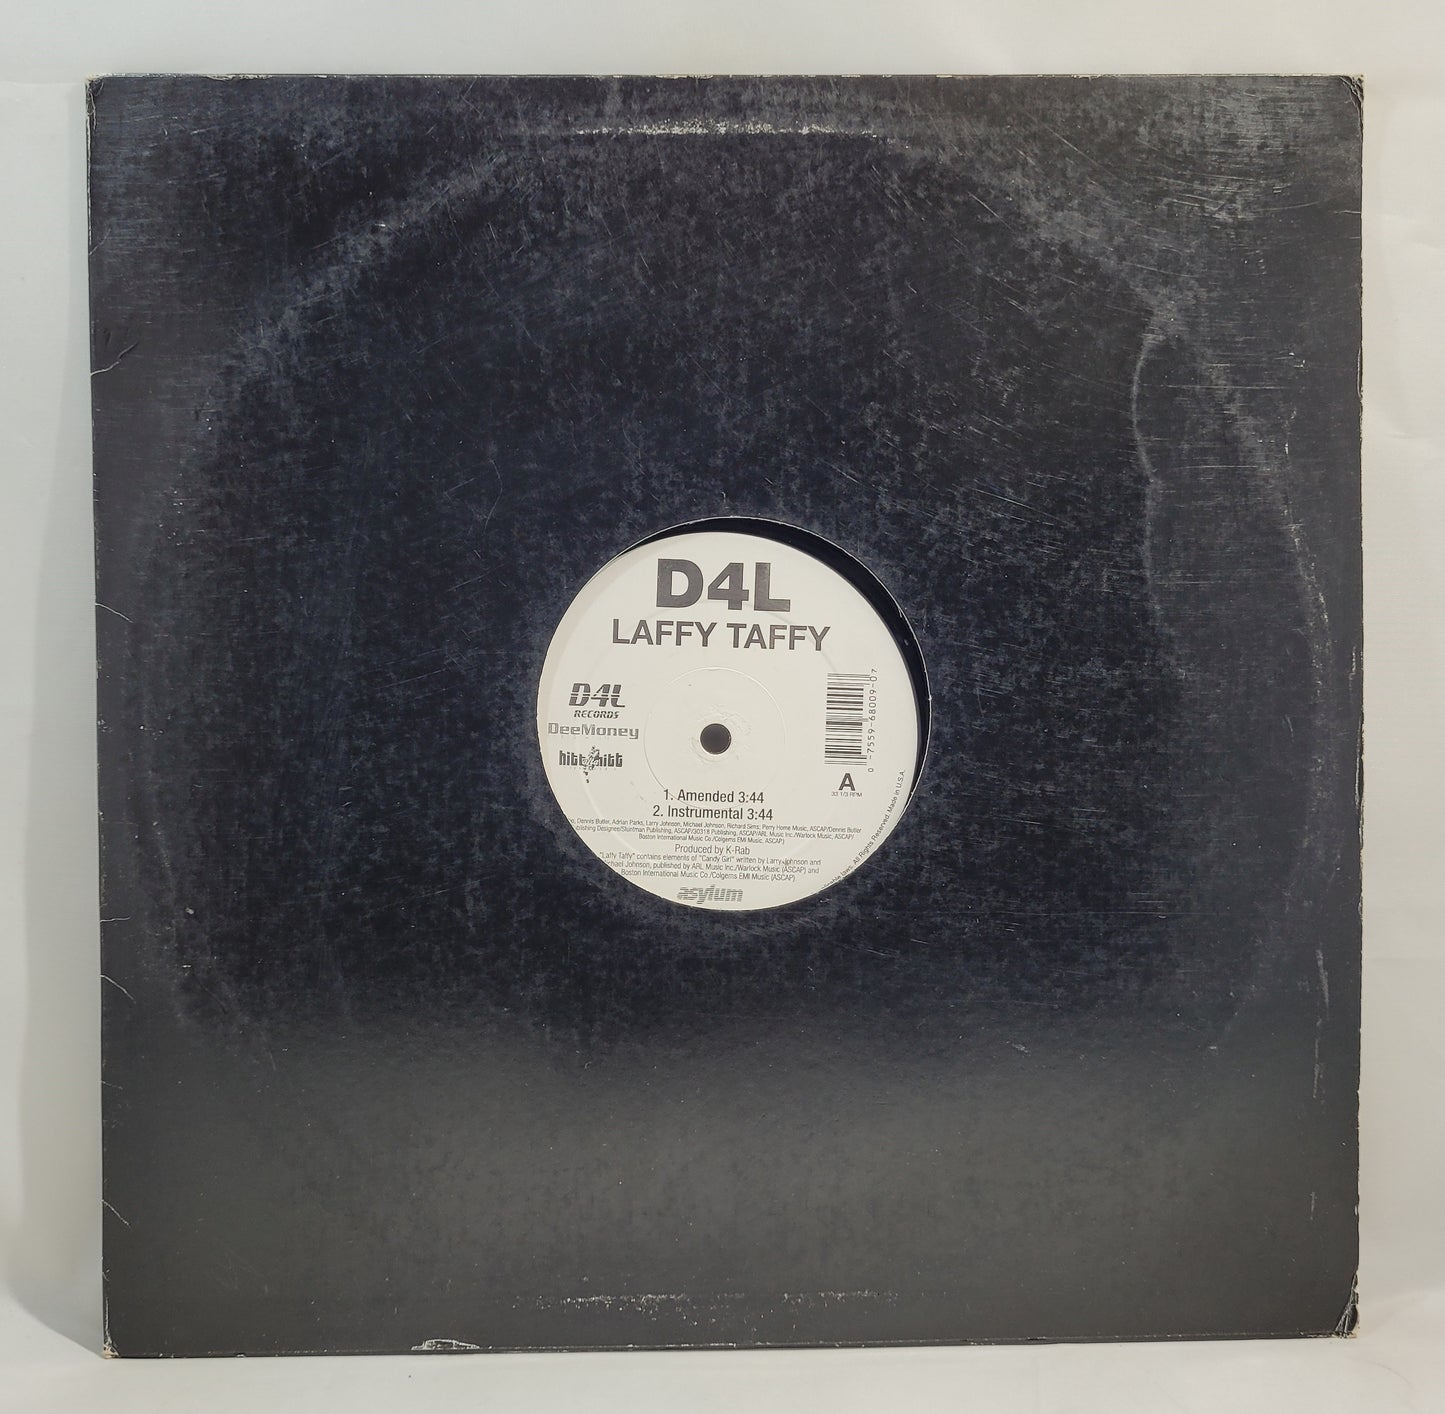 D4L - Laffy Taffy [Vinyl Record 12" Single]